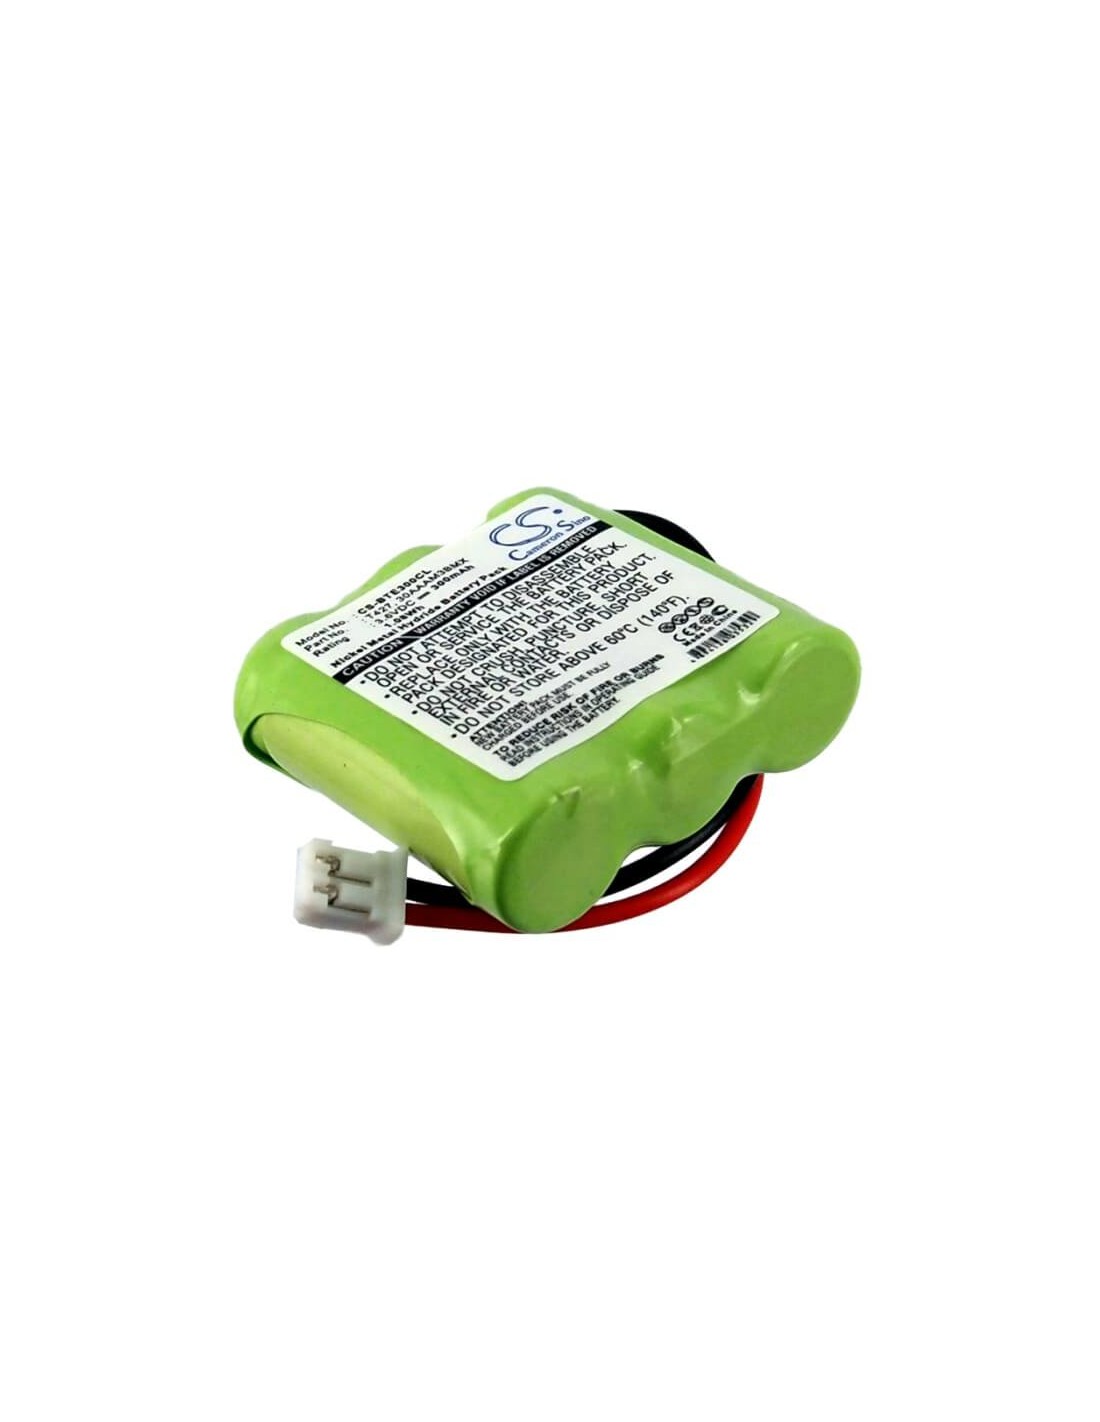 Battery for Digi-phone, Rcl950 3.6V, 300mAh - 1.08Wh